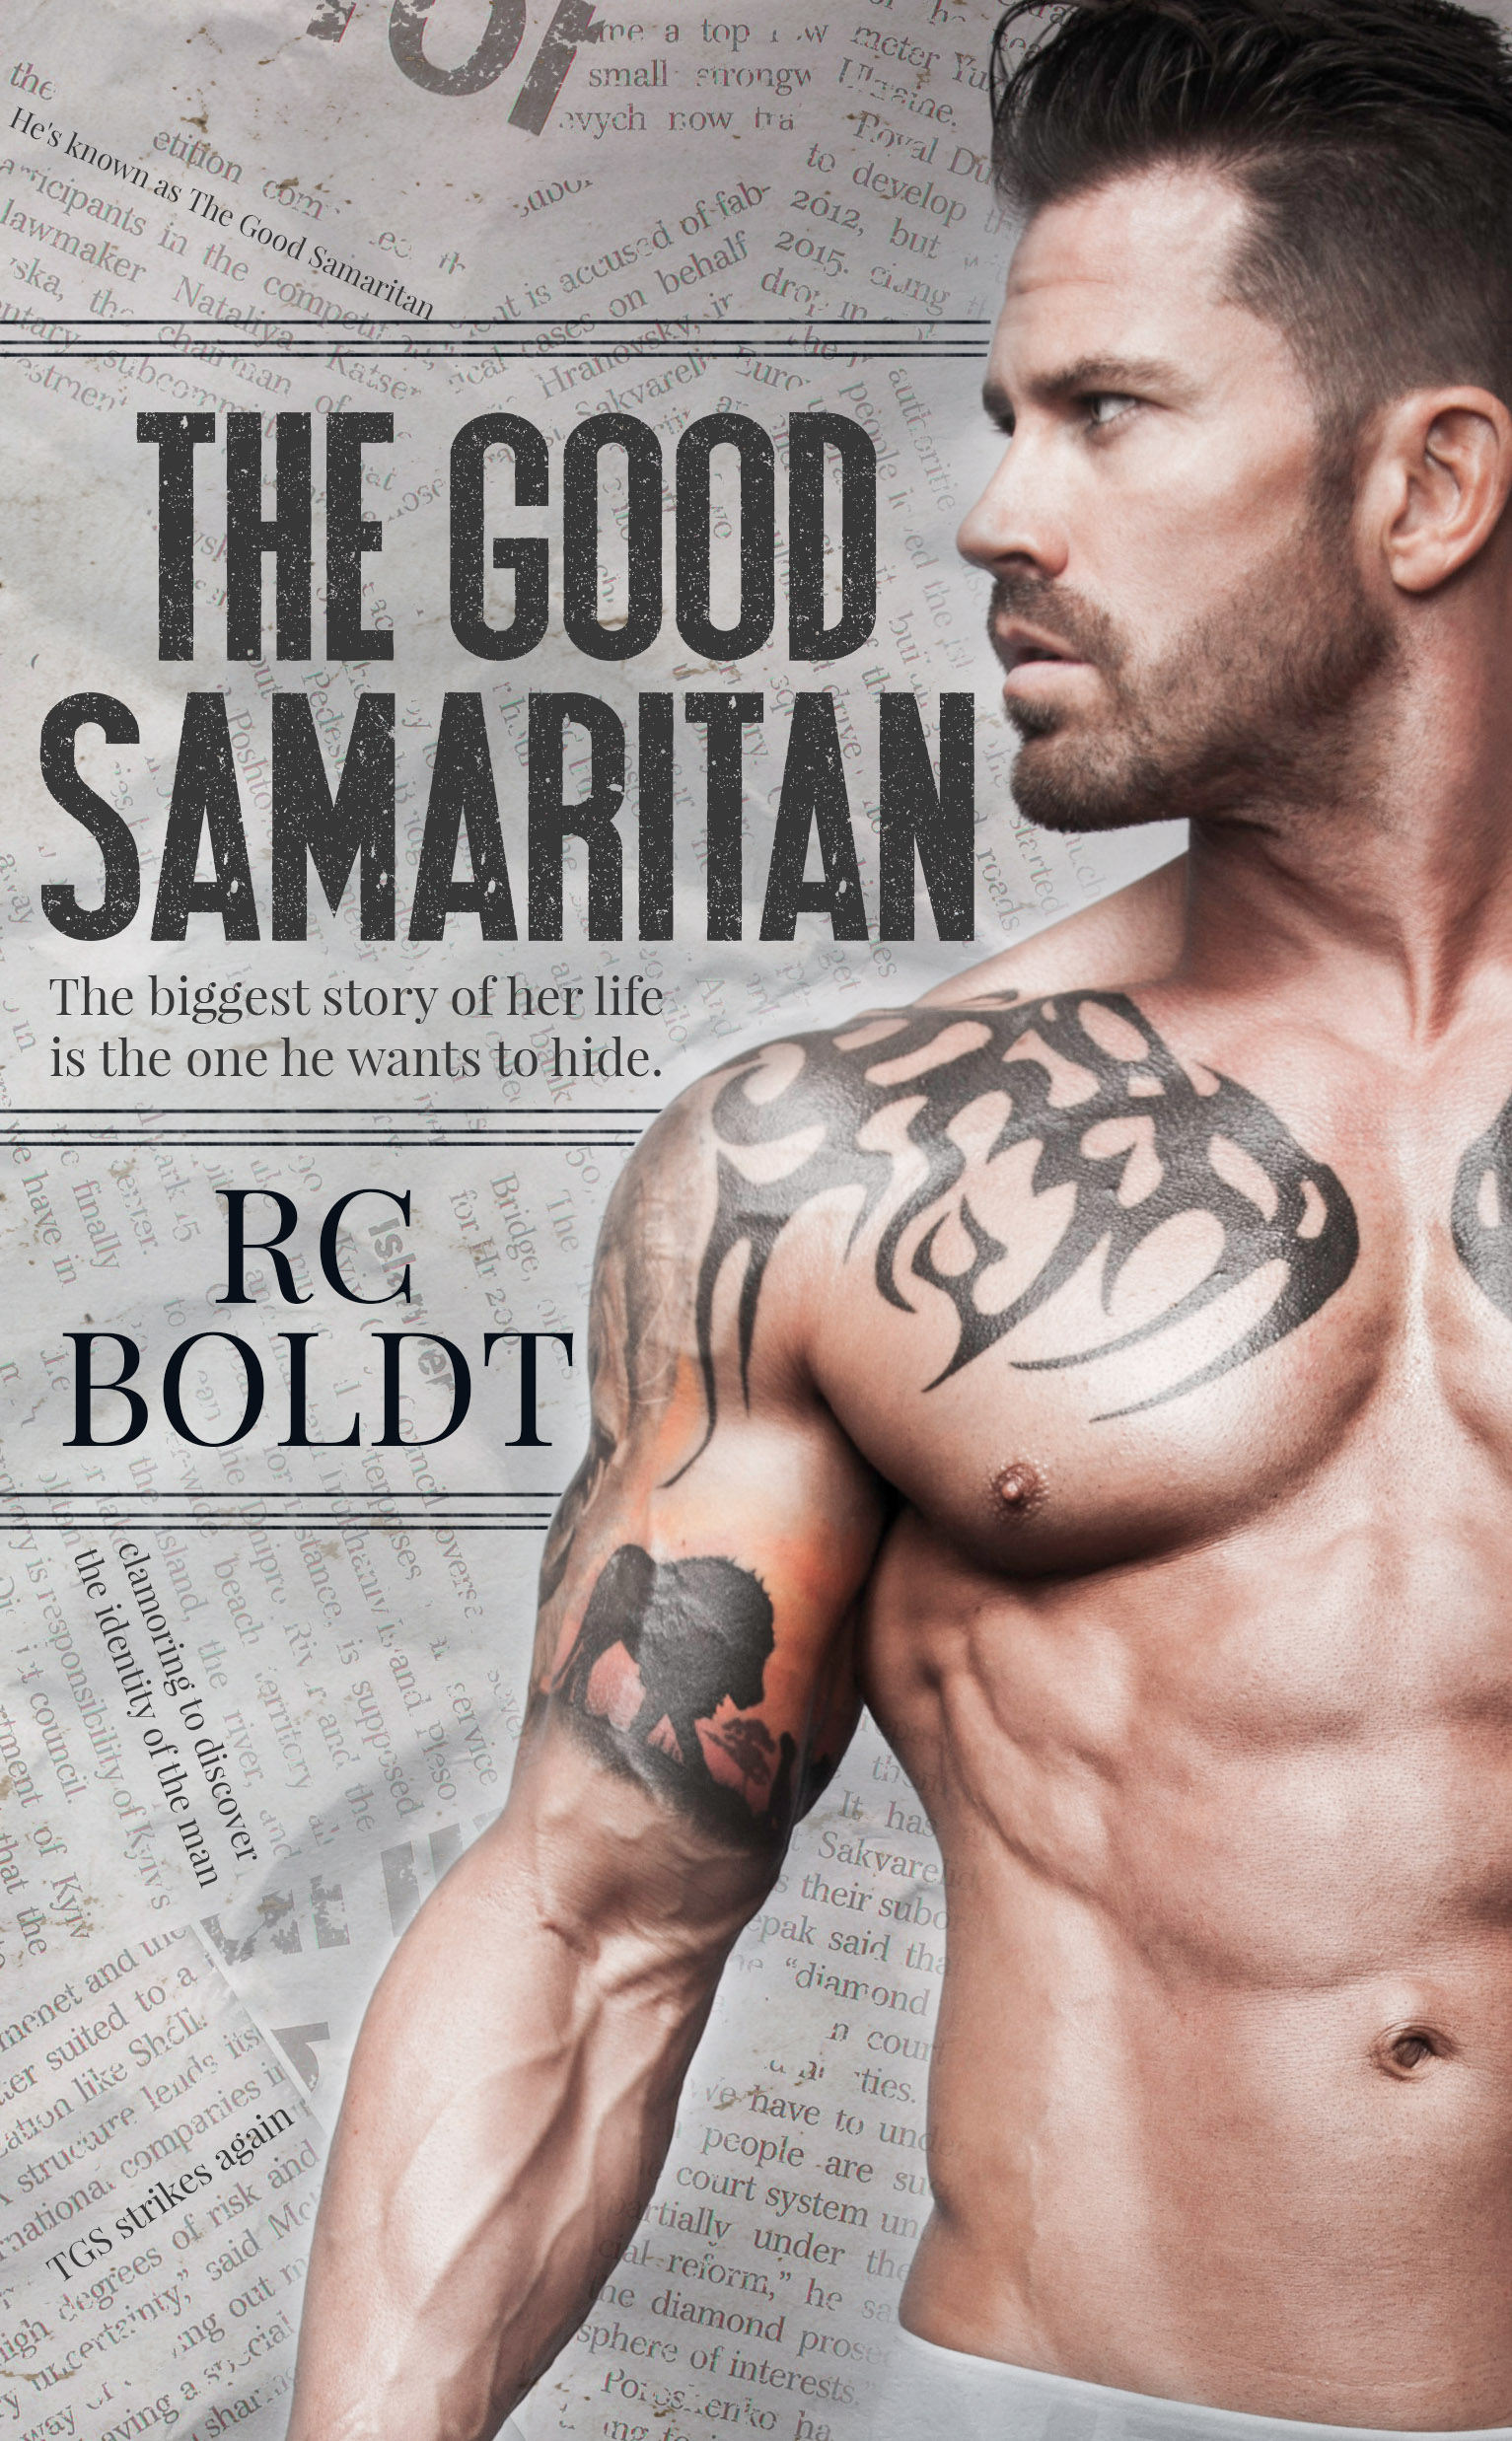 The Good Samaritan by R.C. Boldt [Cover Reveal]